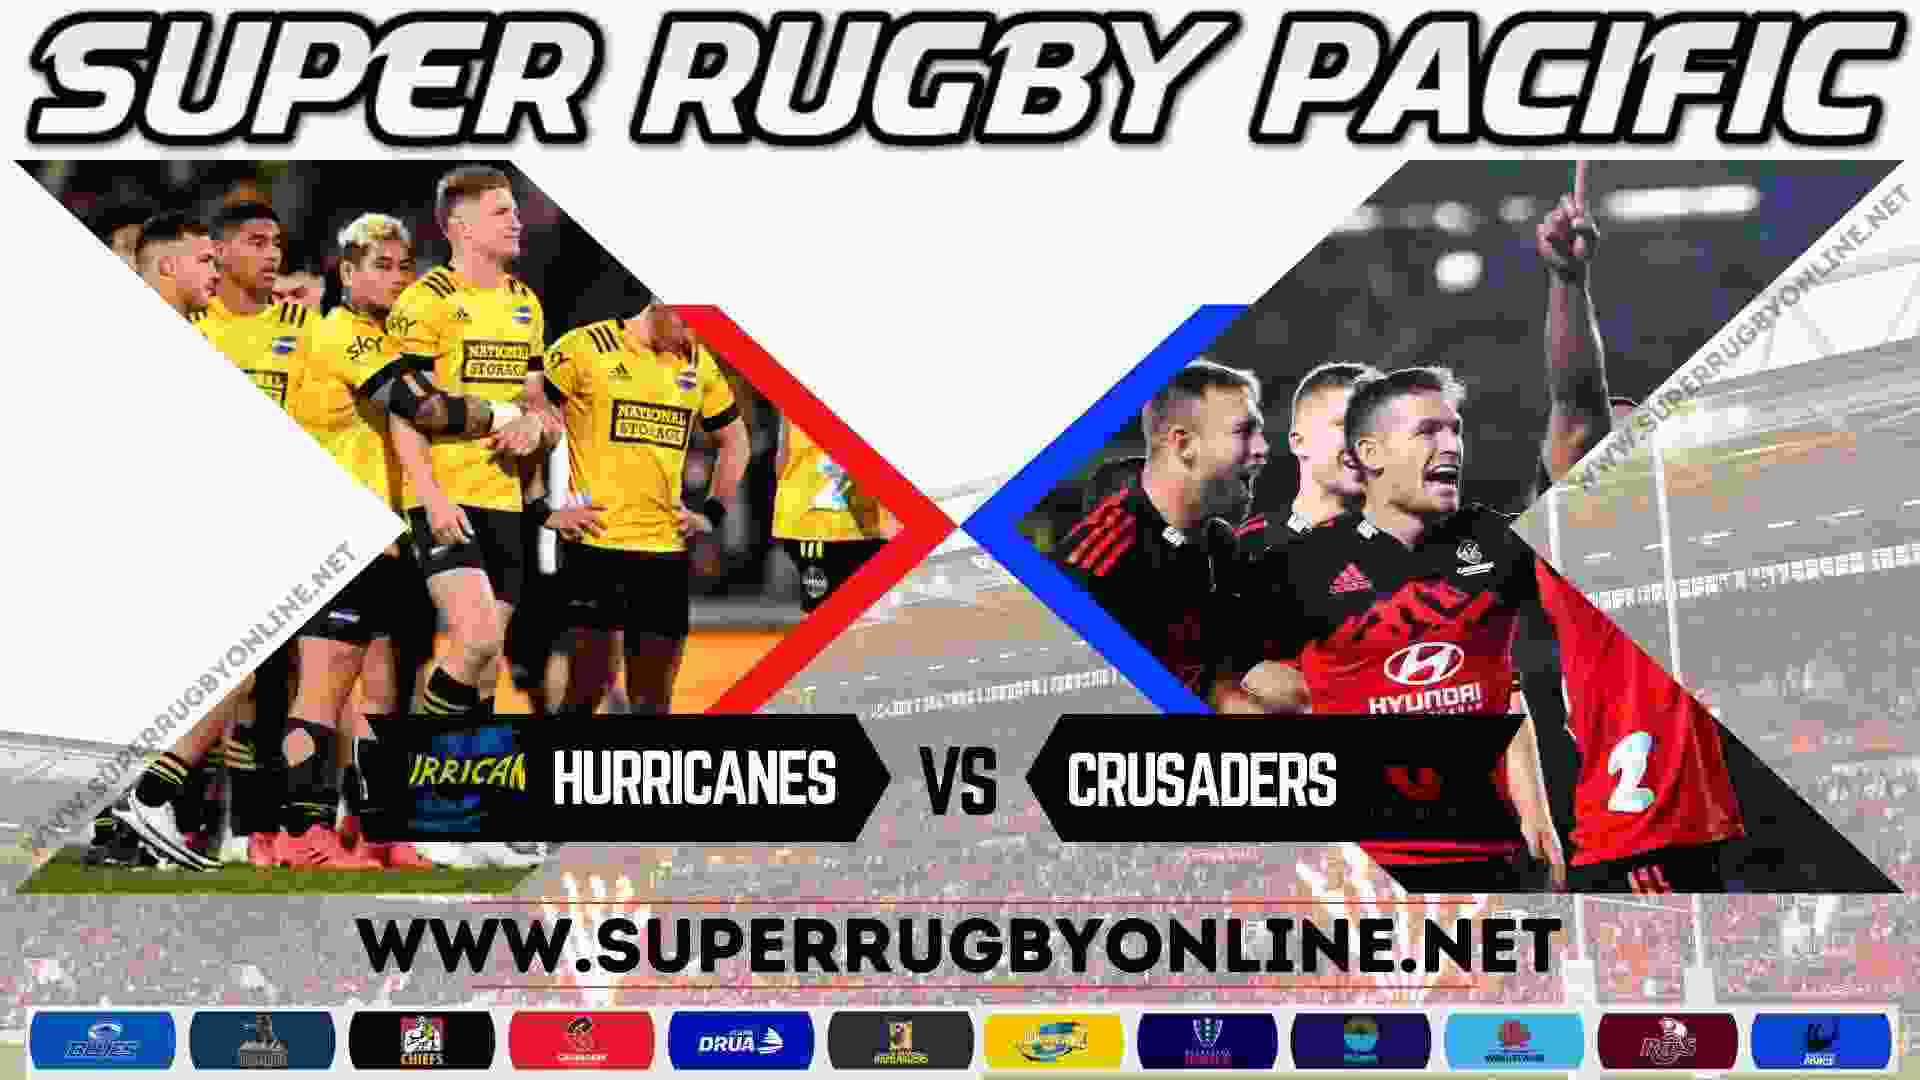 Hurricanes VS Crusaders Super Rugby Live Stream